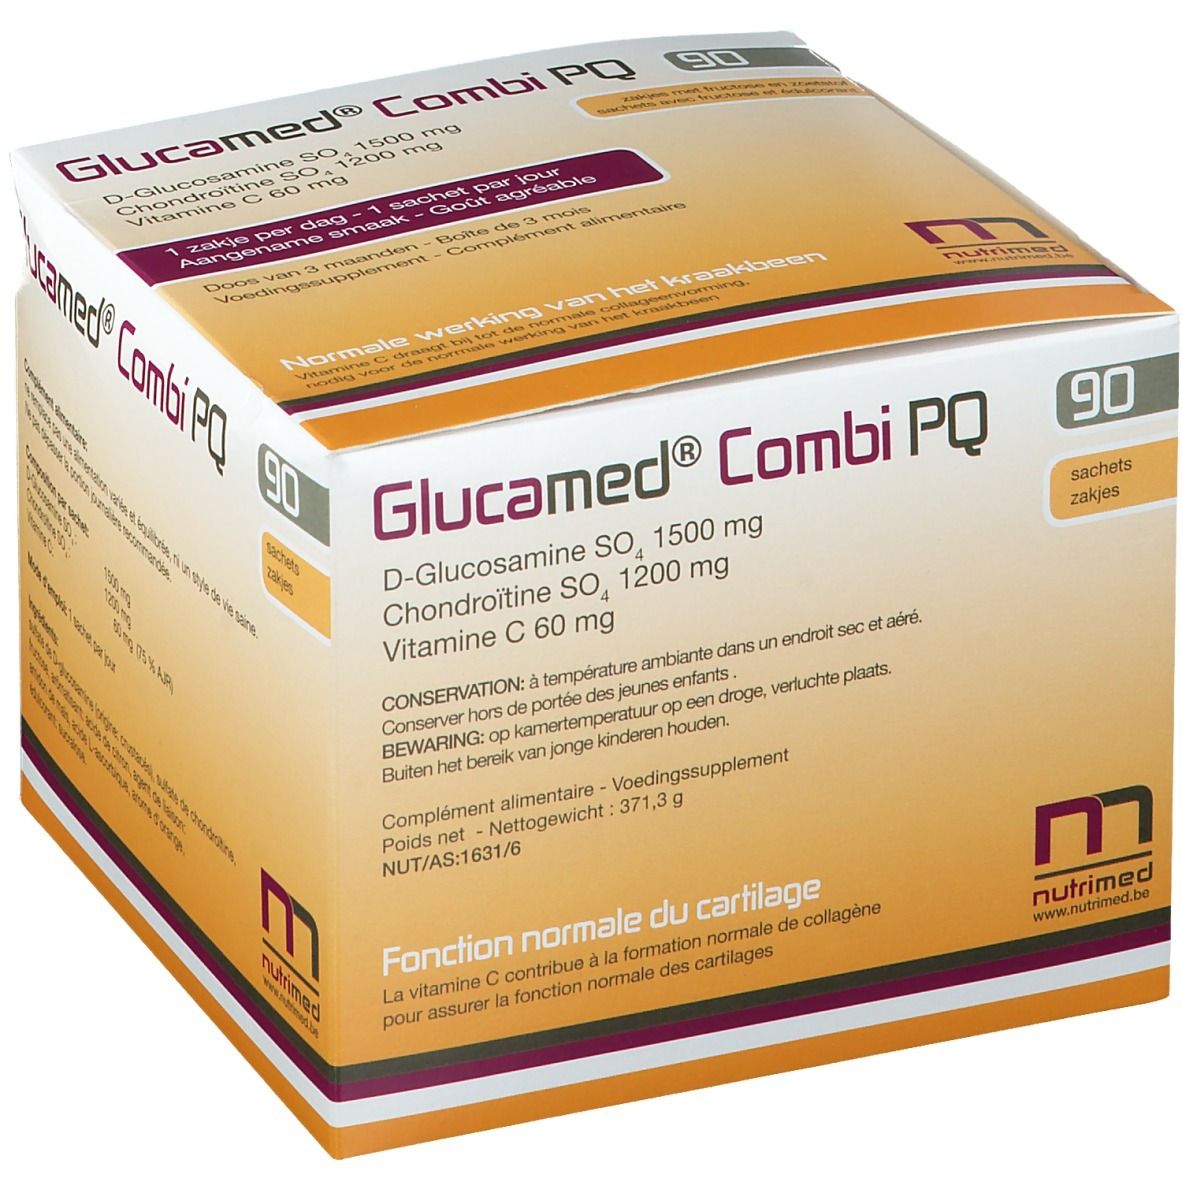 Glucamed® Combi PQ Sachets